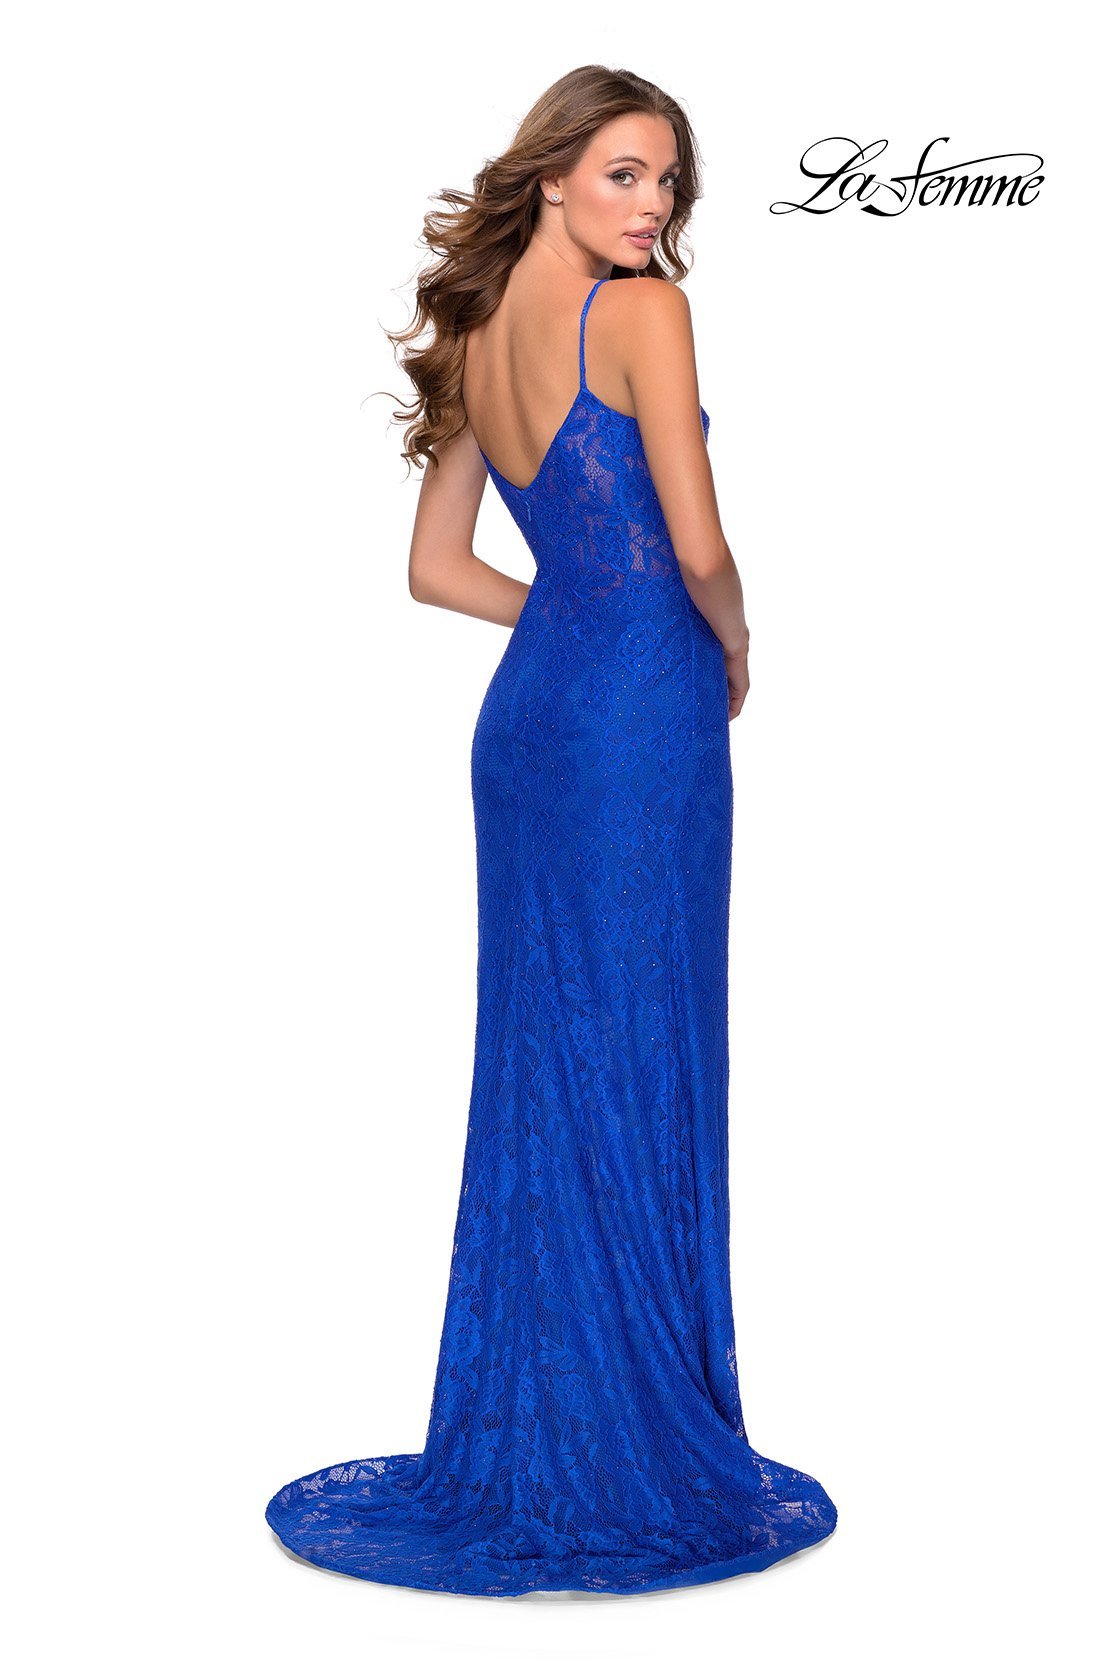 La Femme 28576 dress images in these colors: Royal Blue.